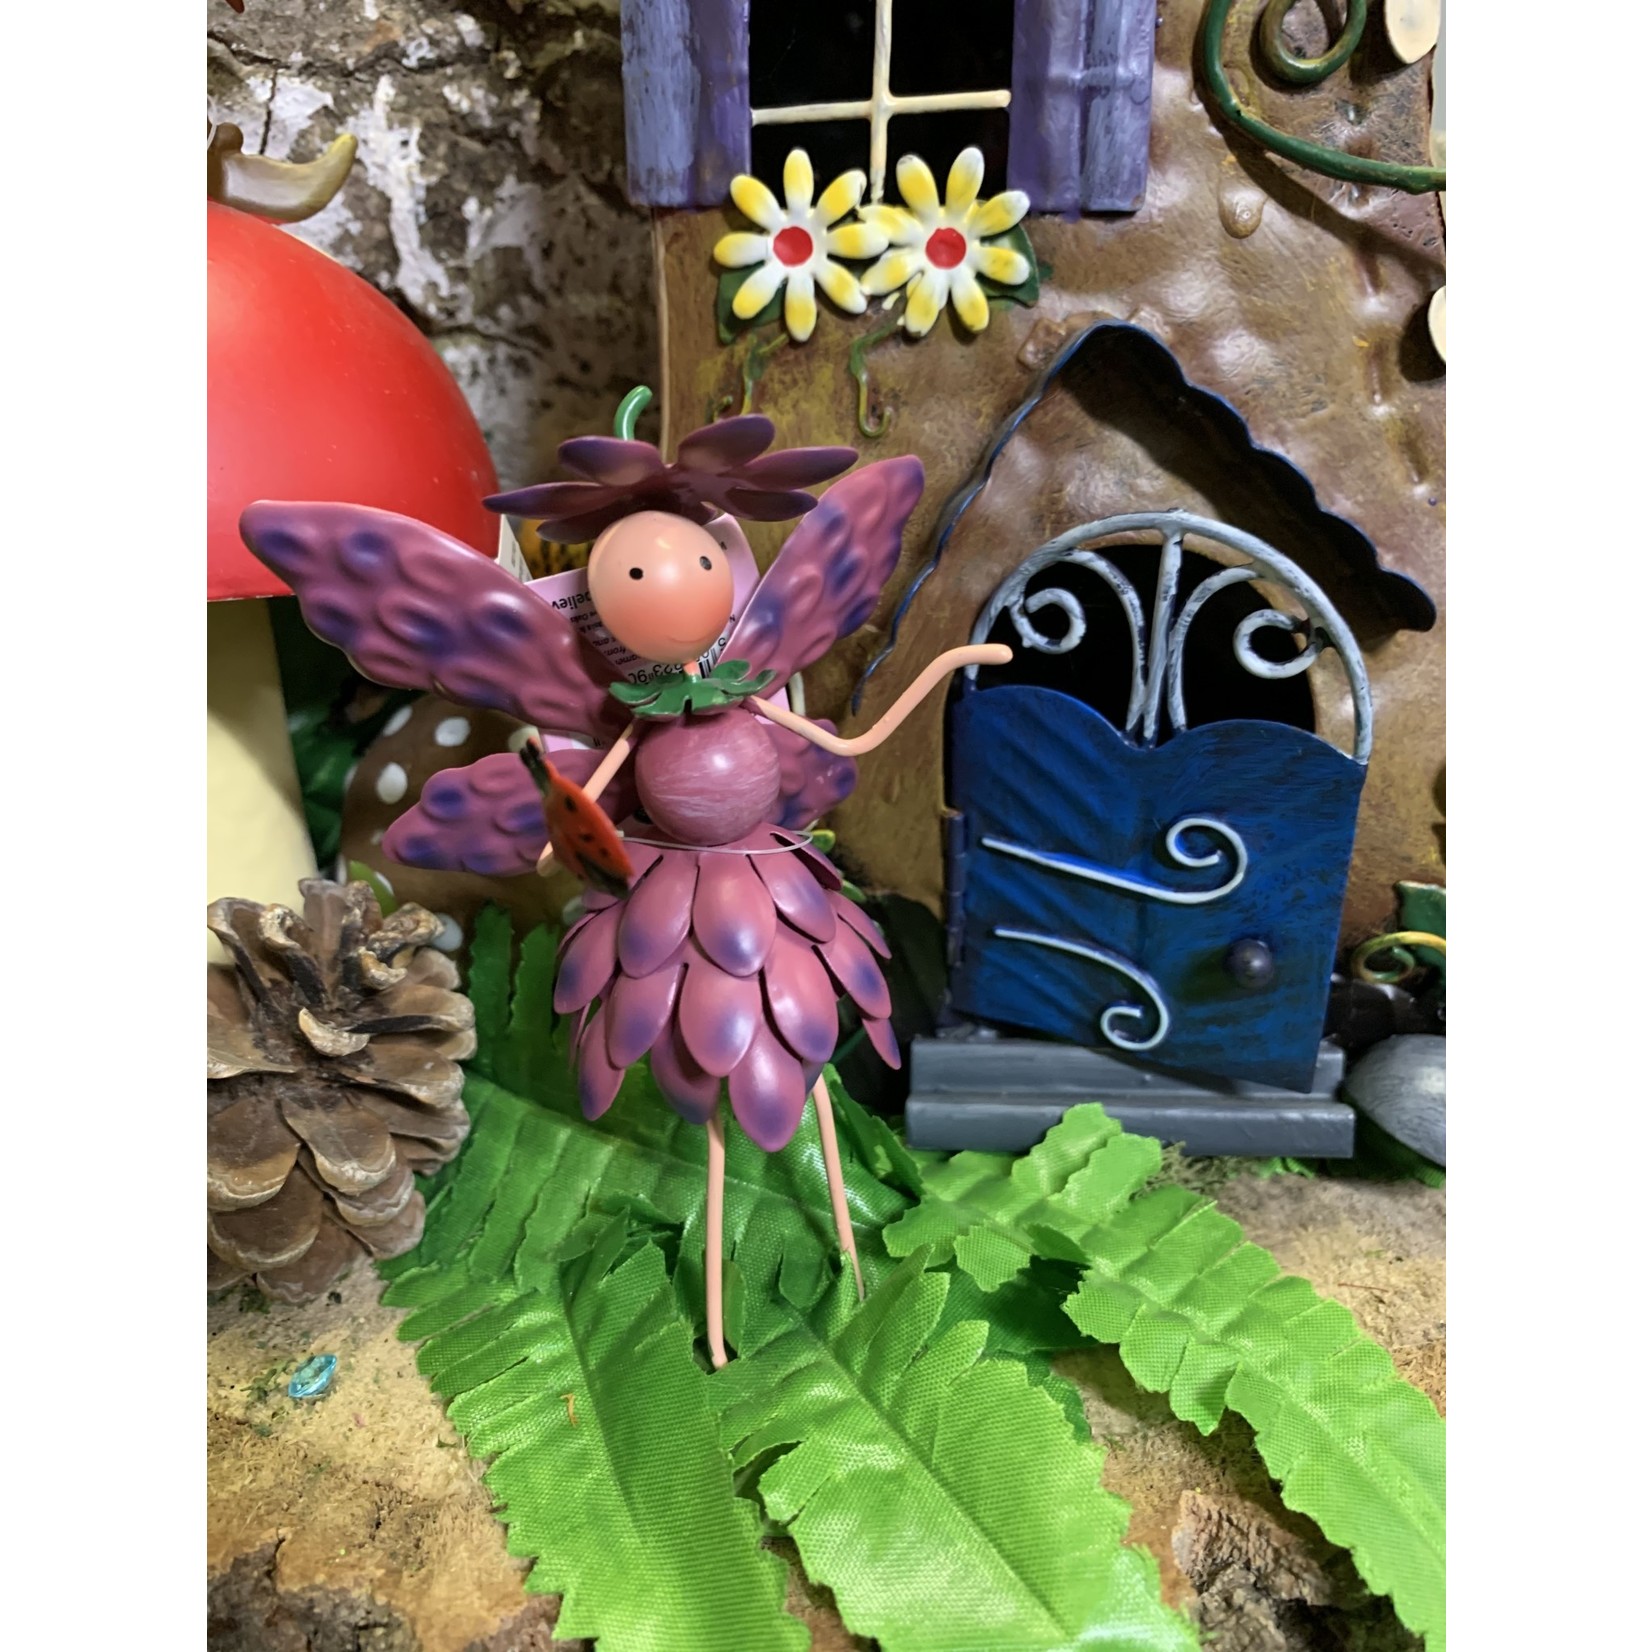 World of Make Believe Fairy Kingdom - Christie the Chrysanthemum Fairy (mini)